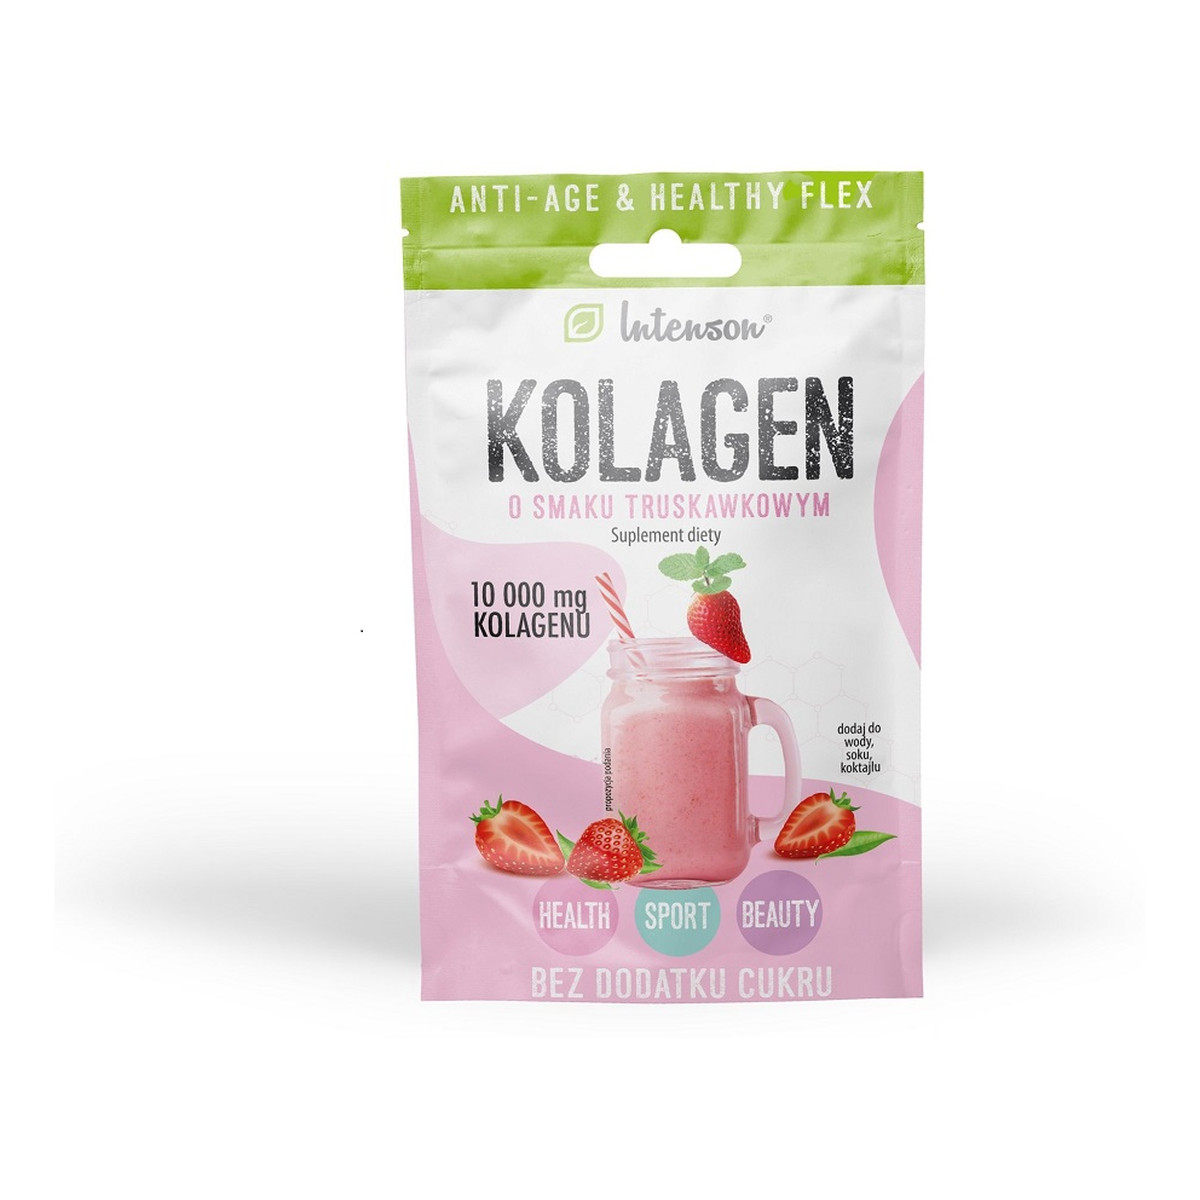 Intenson Kolagen o smaku truskawkowym suplement diety 11g